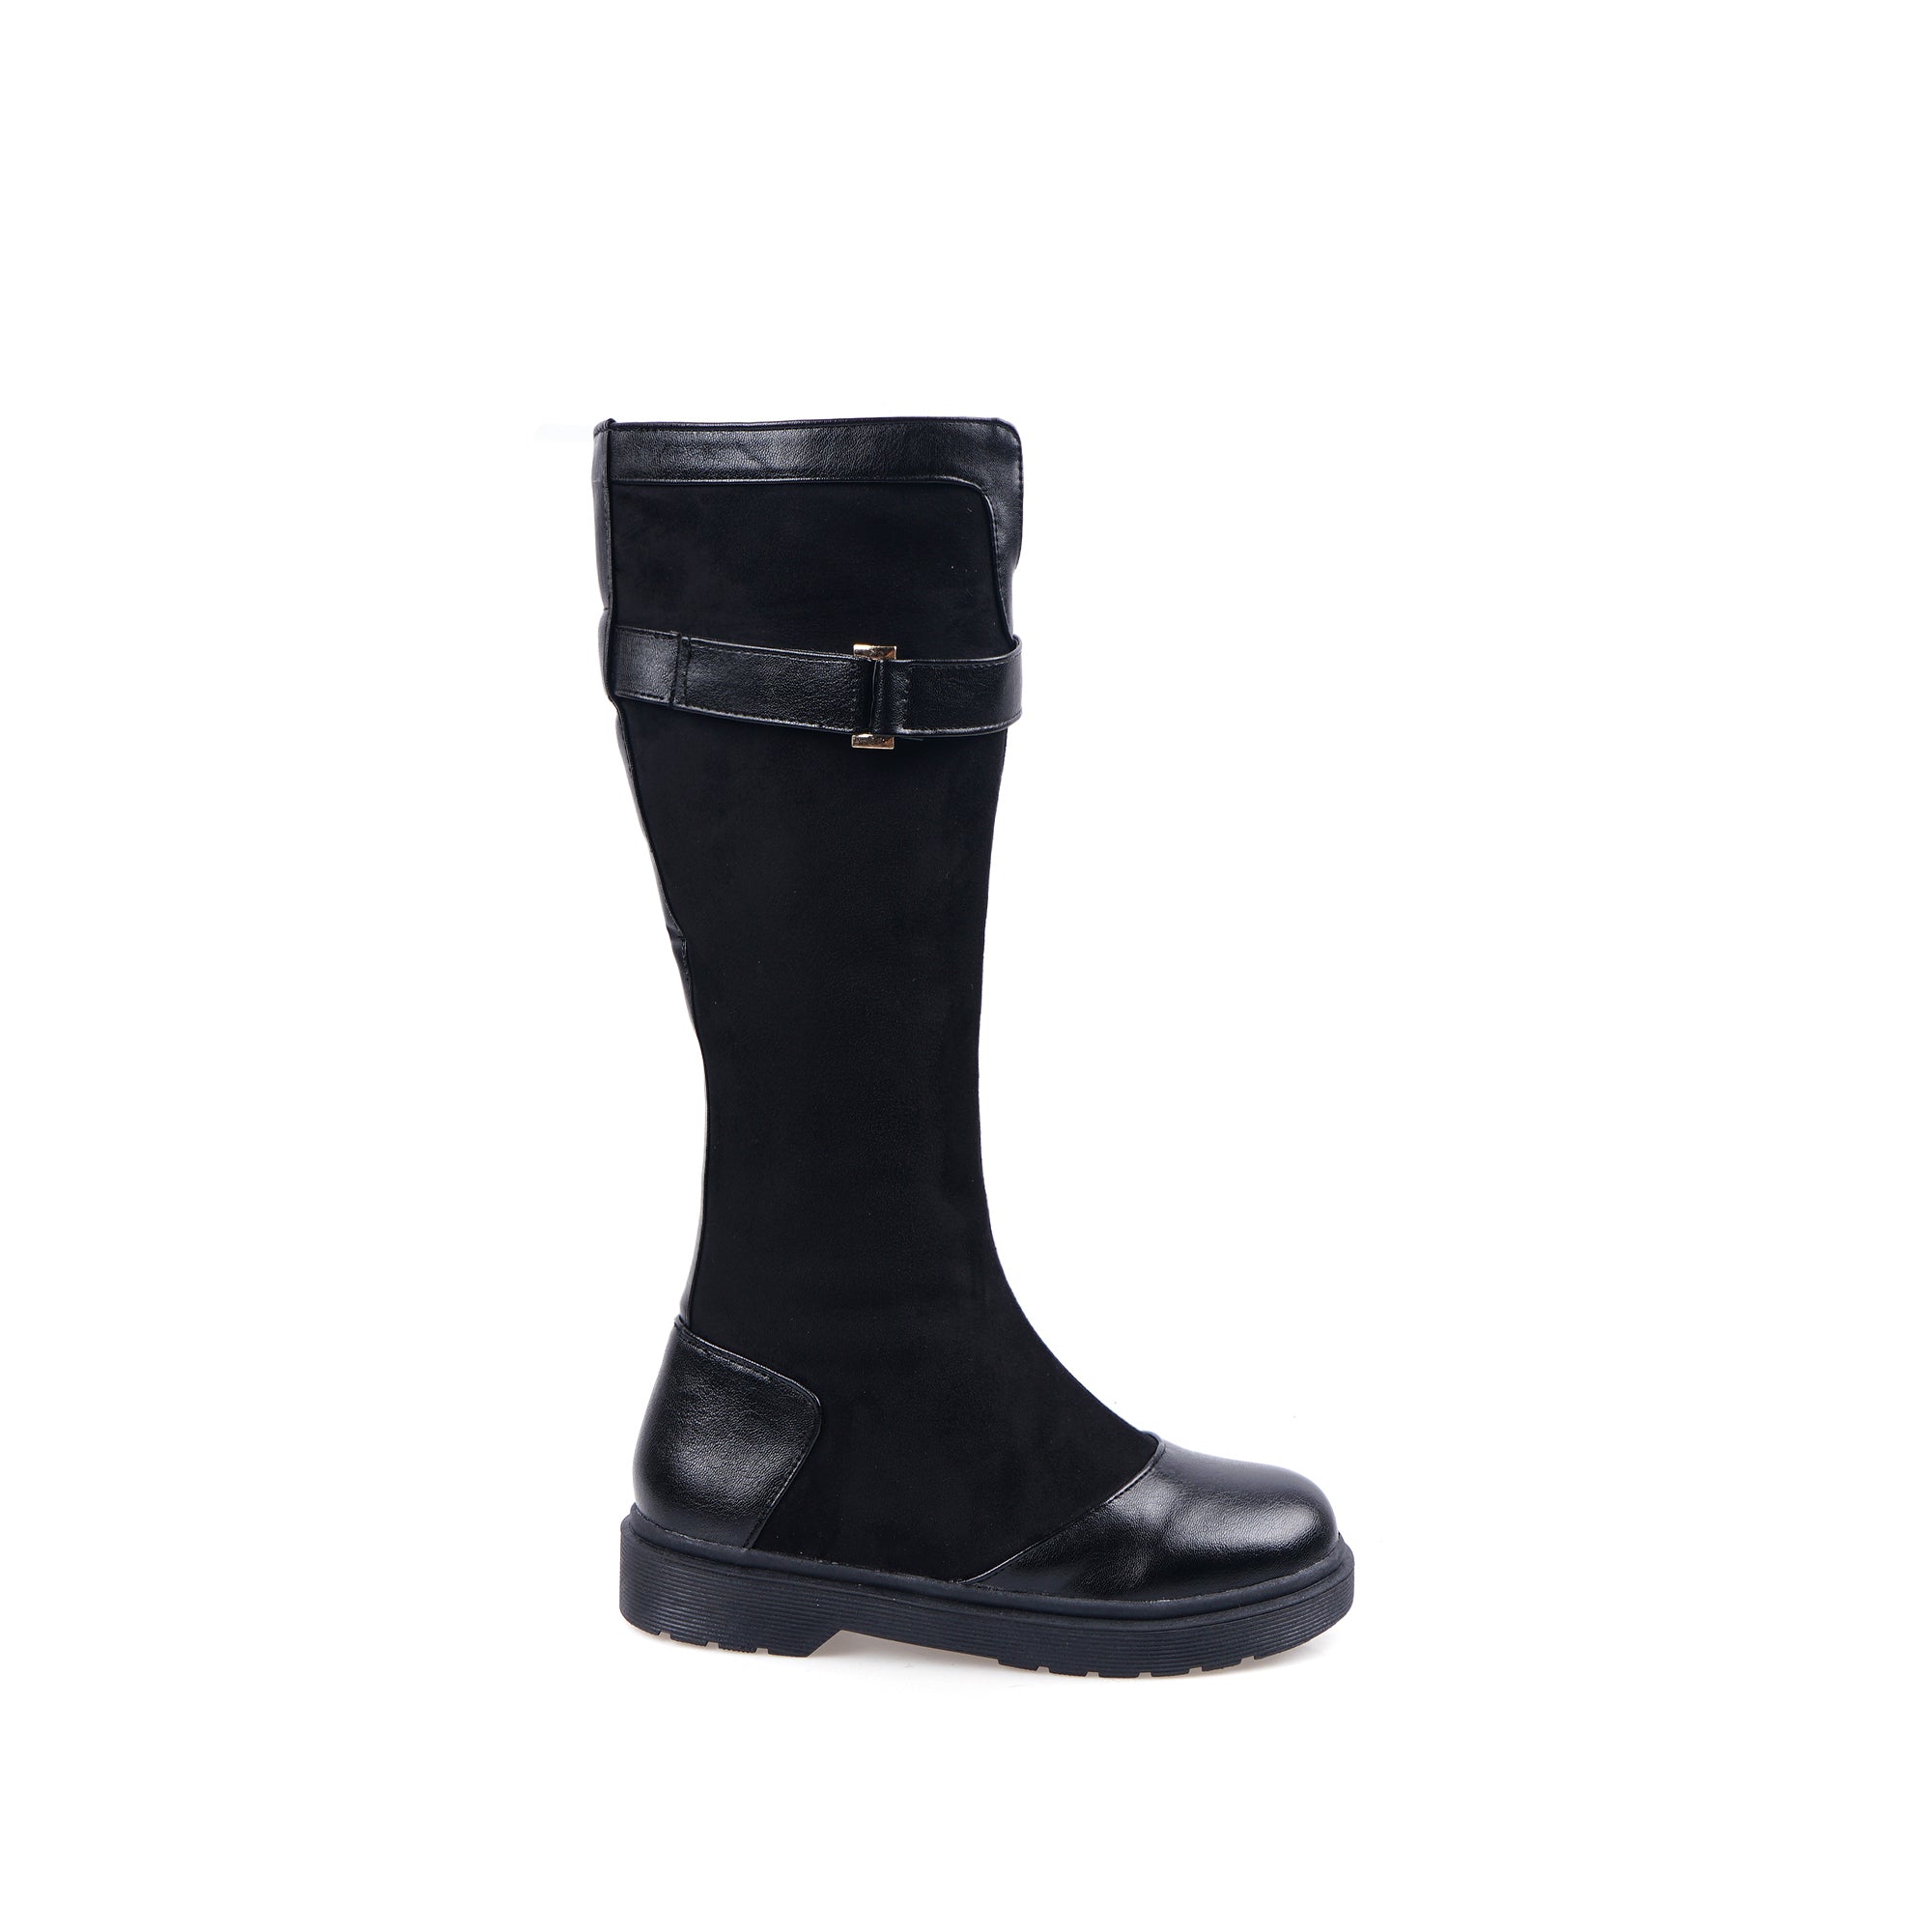 Bigsizeheels Round toe flat side zipper boots - Black freeshipping - bigsizeheel®-size5-size15 -All Plus Sizes Available!